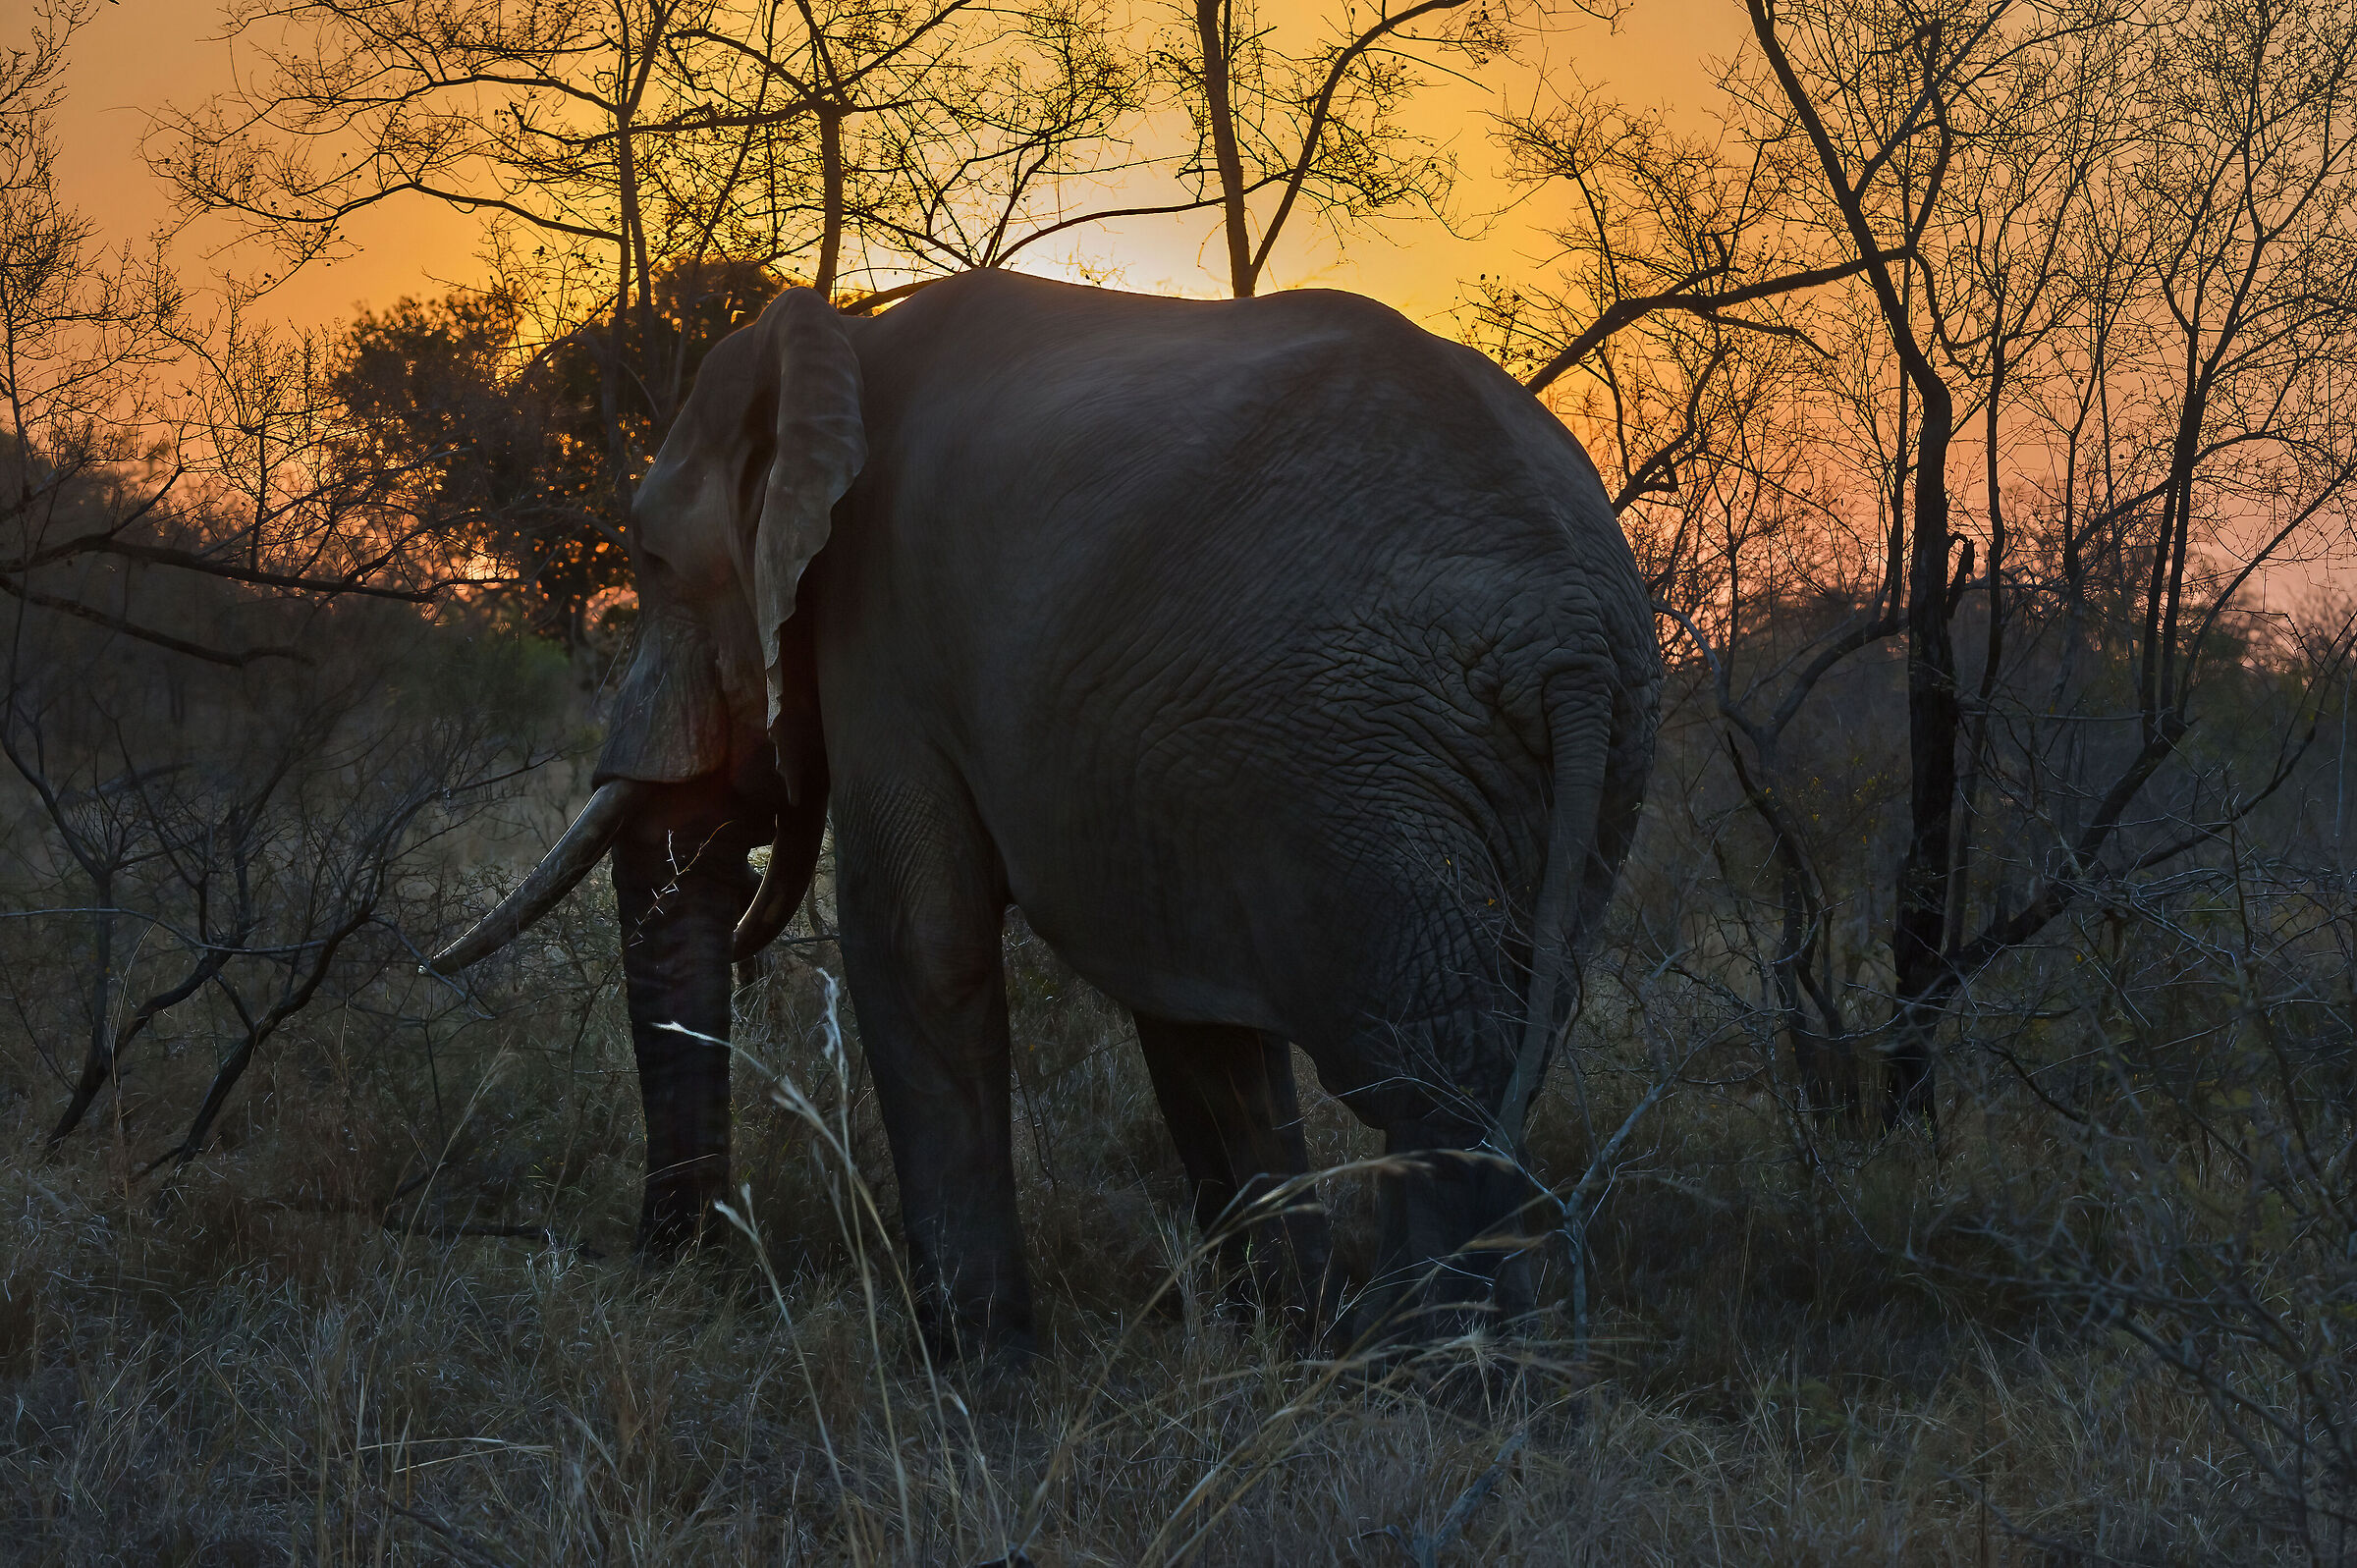 Elefante africano (Loxodonta africana)...